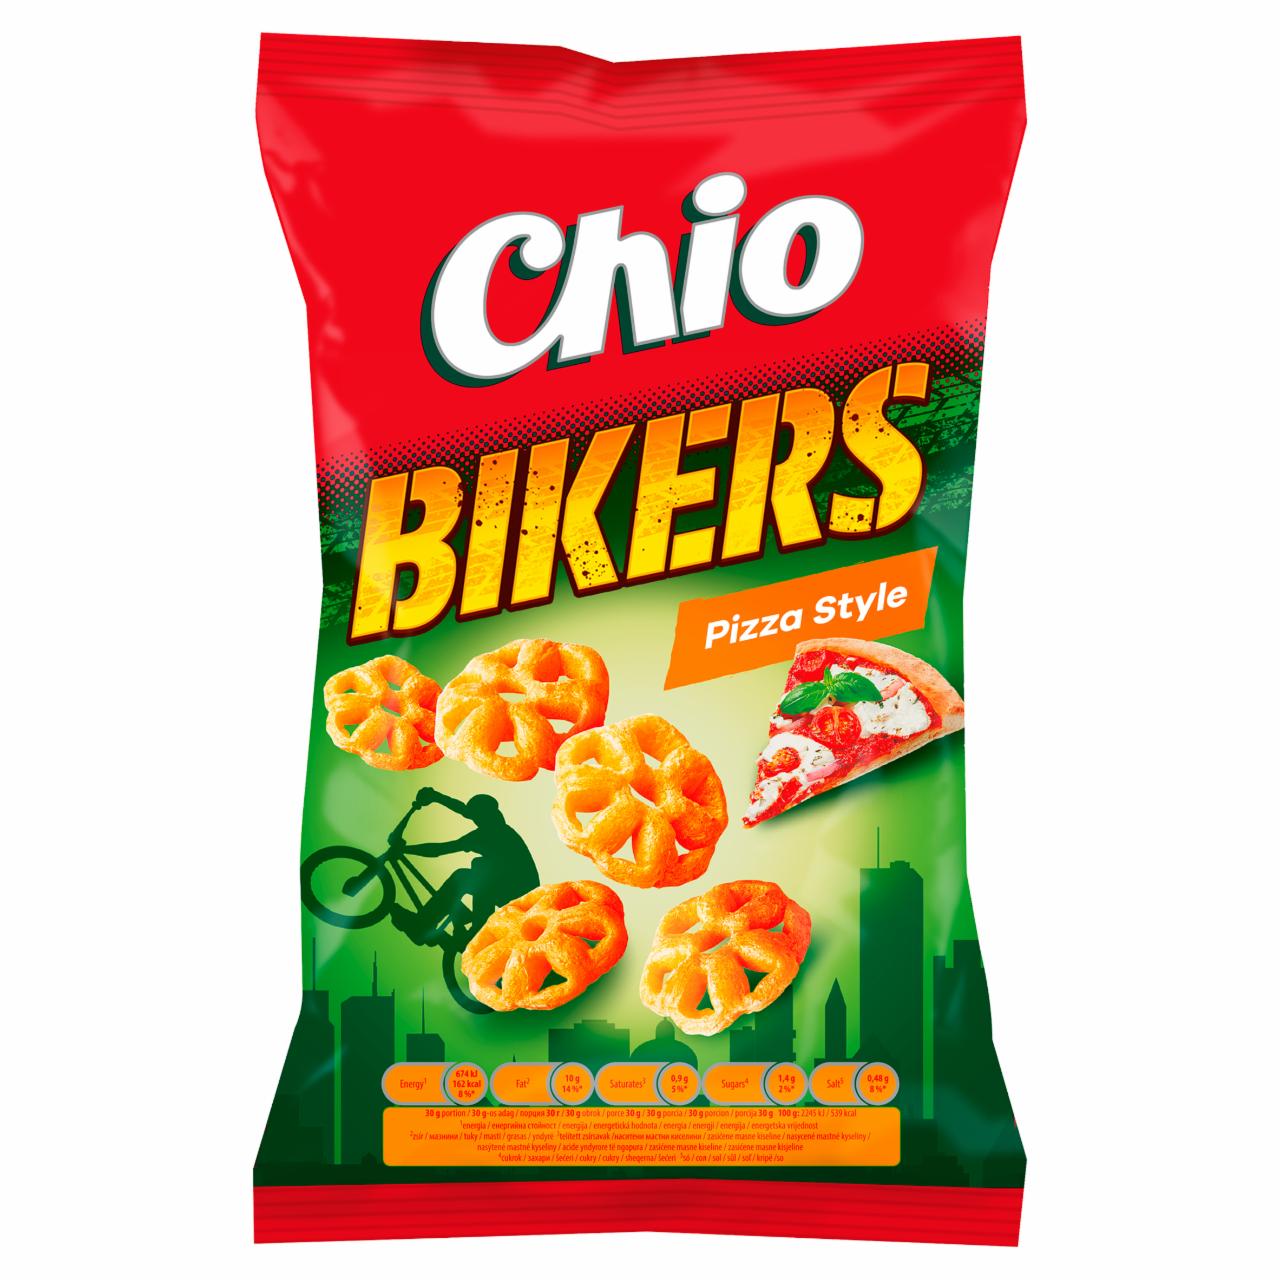 Képek - Chio Bikers pizza ízű kukoricasnack 80 g